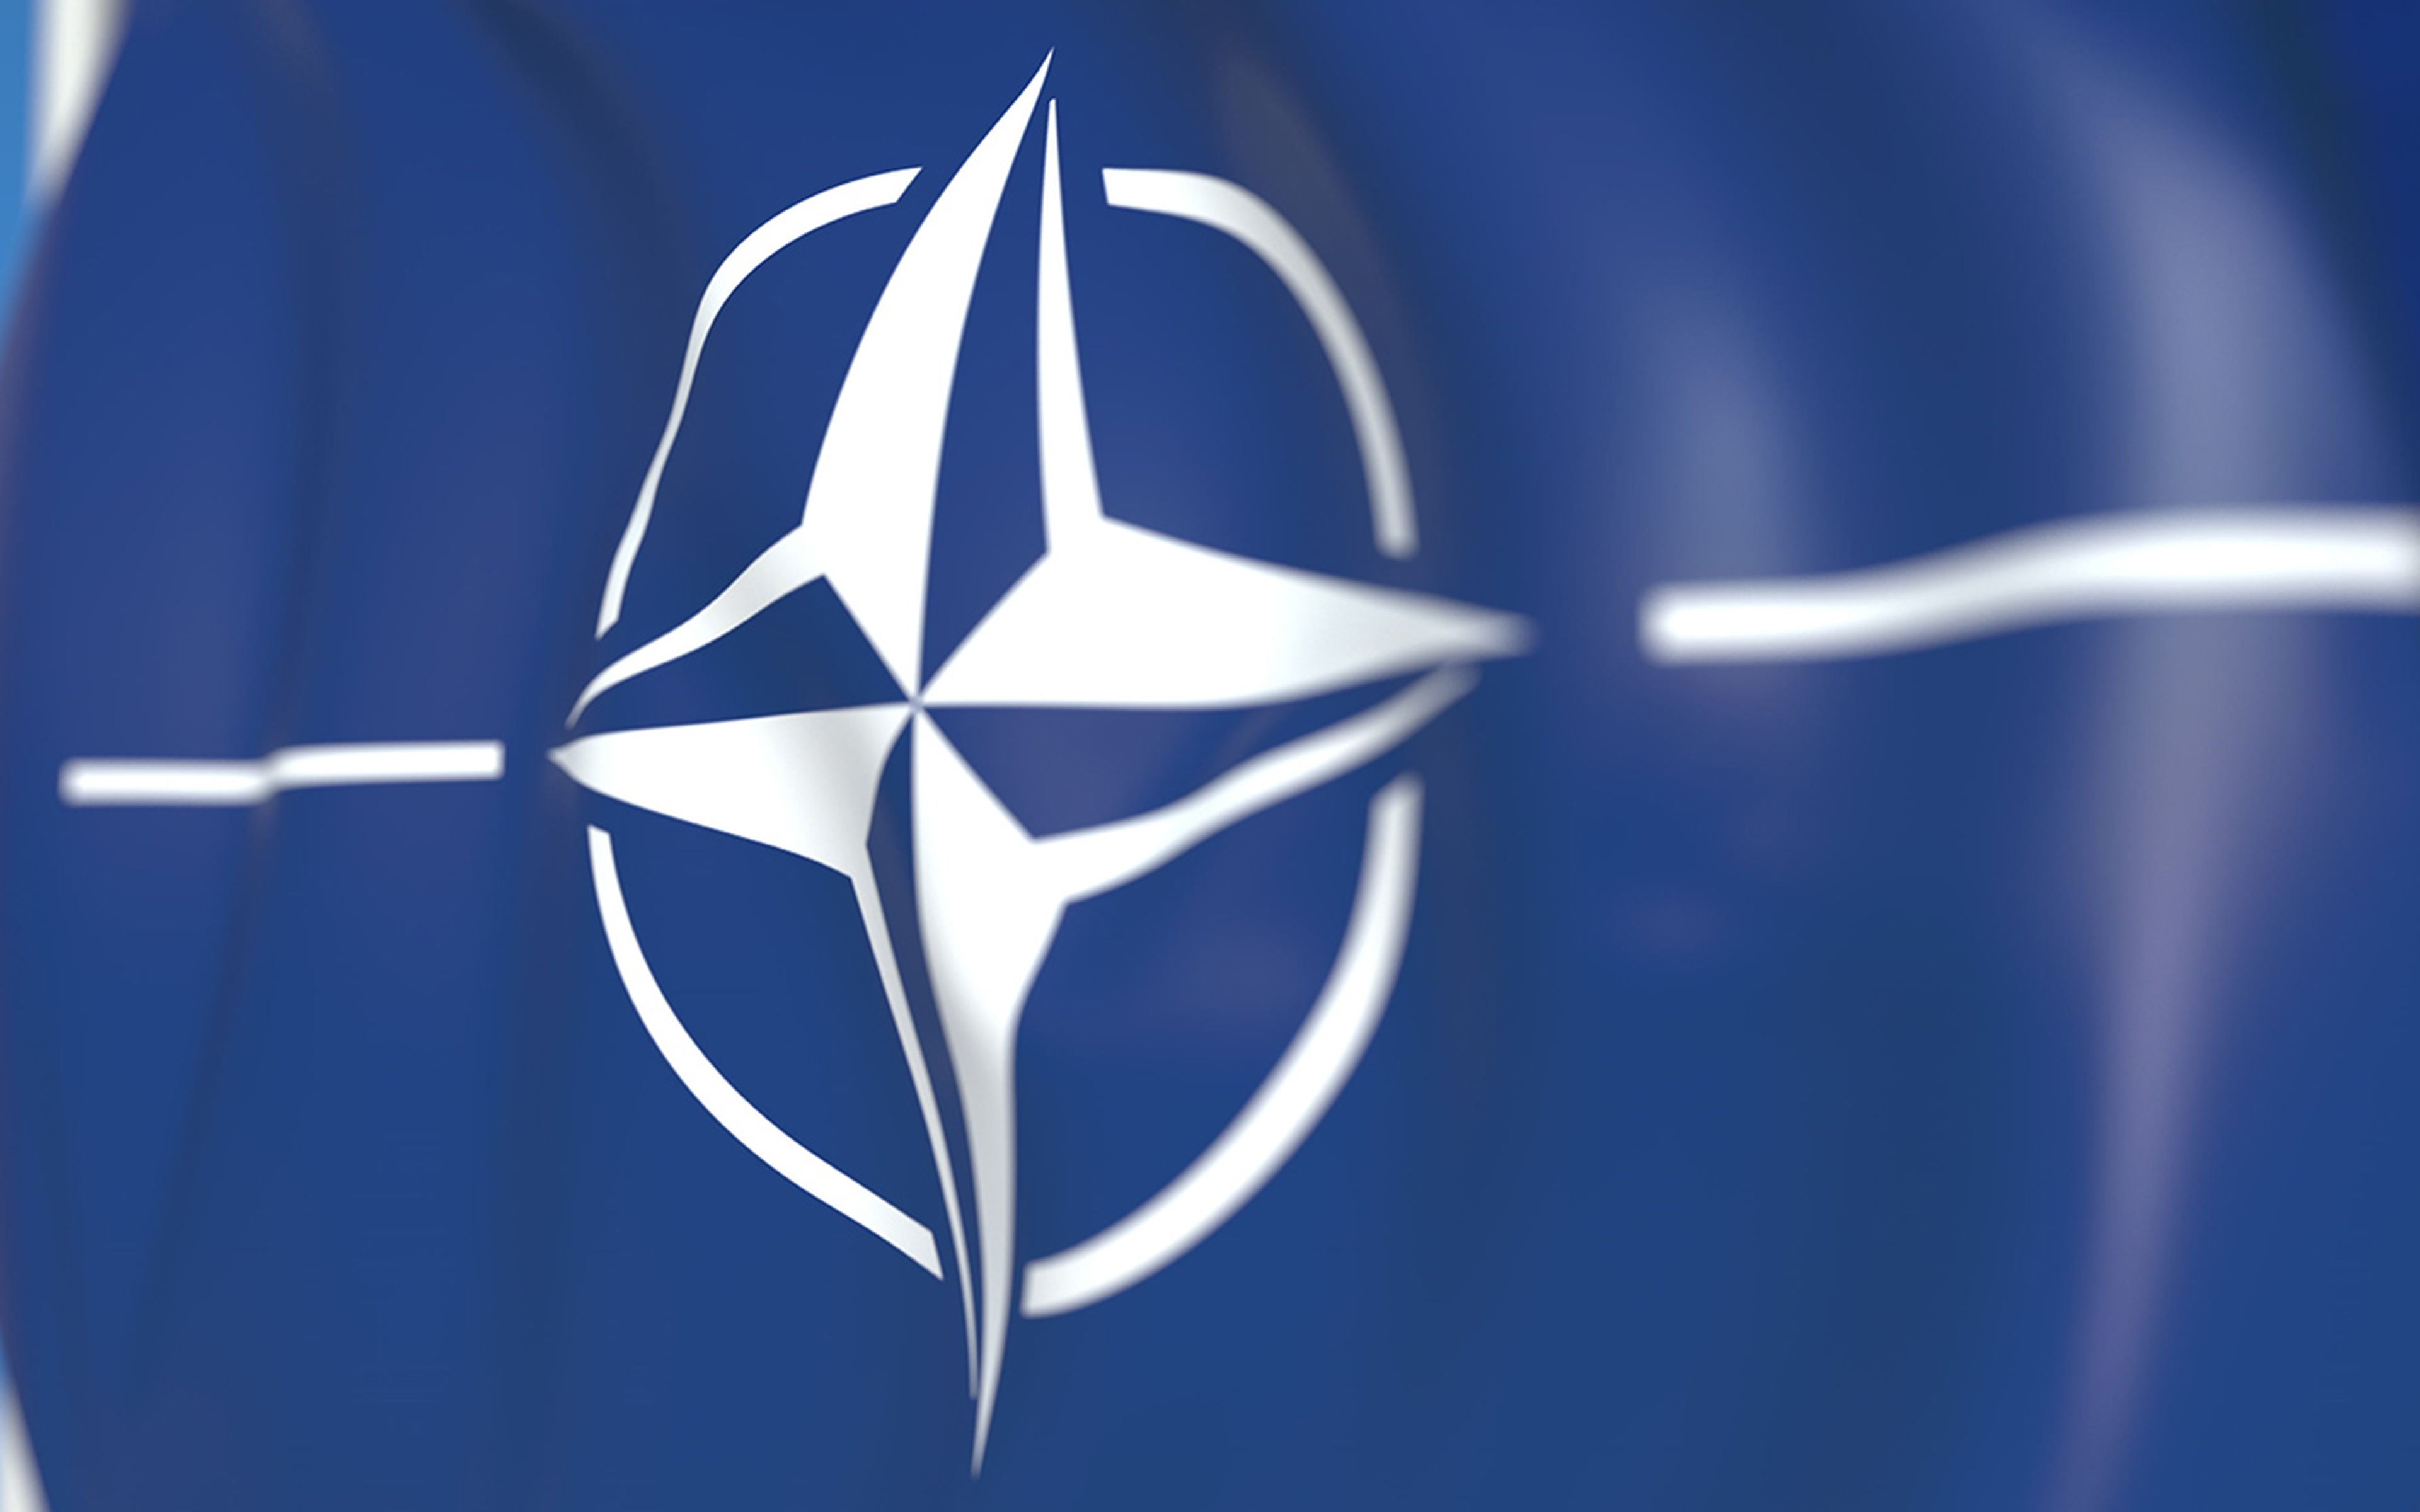 Waving flag with NATO logo. (Alexey Novikov/Adobe Stock Images)